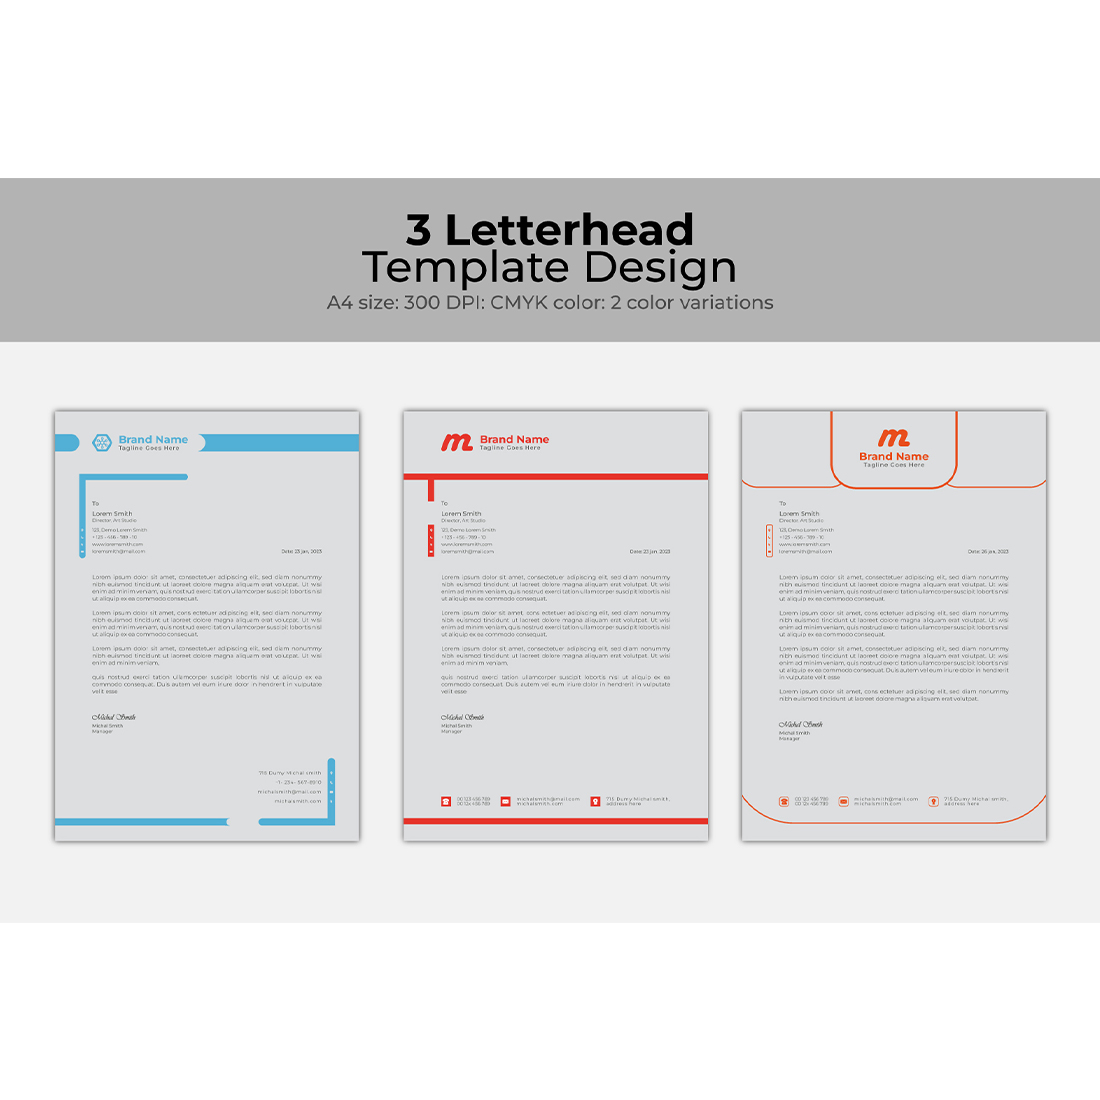 Letterhead Template Design cover image.